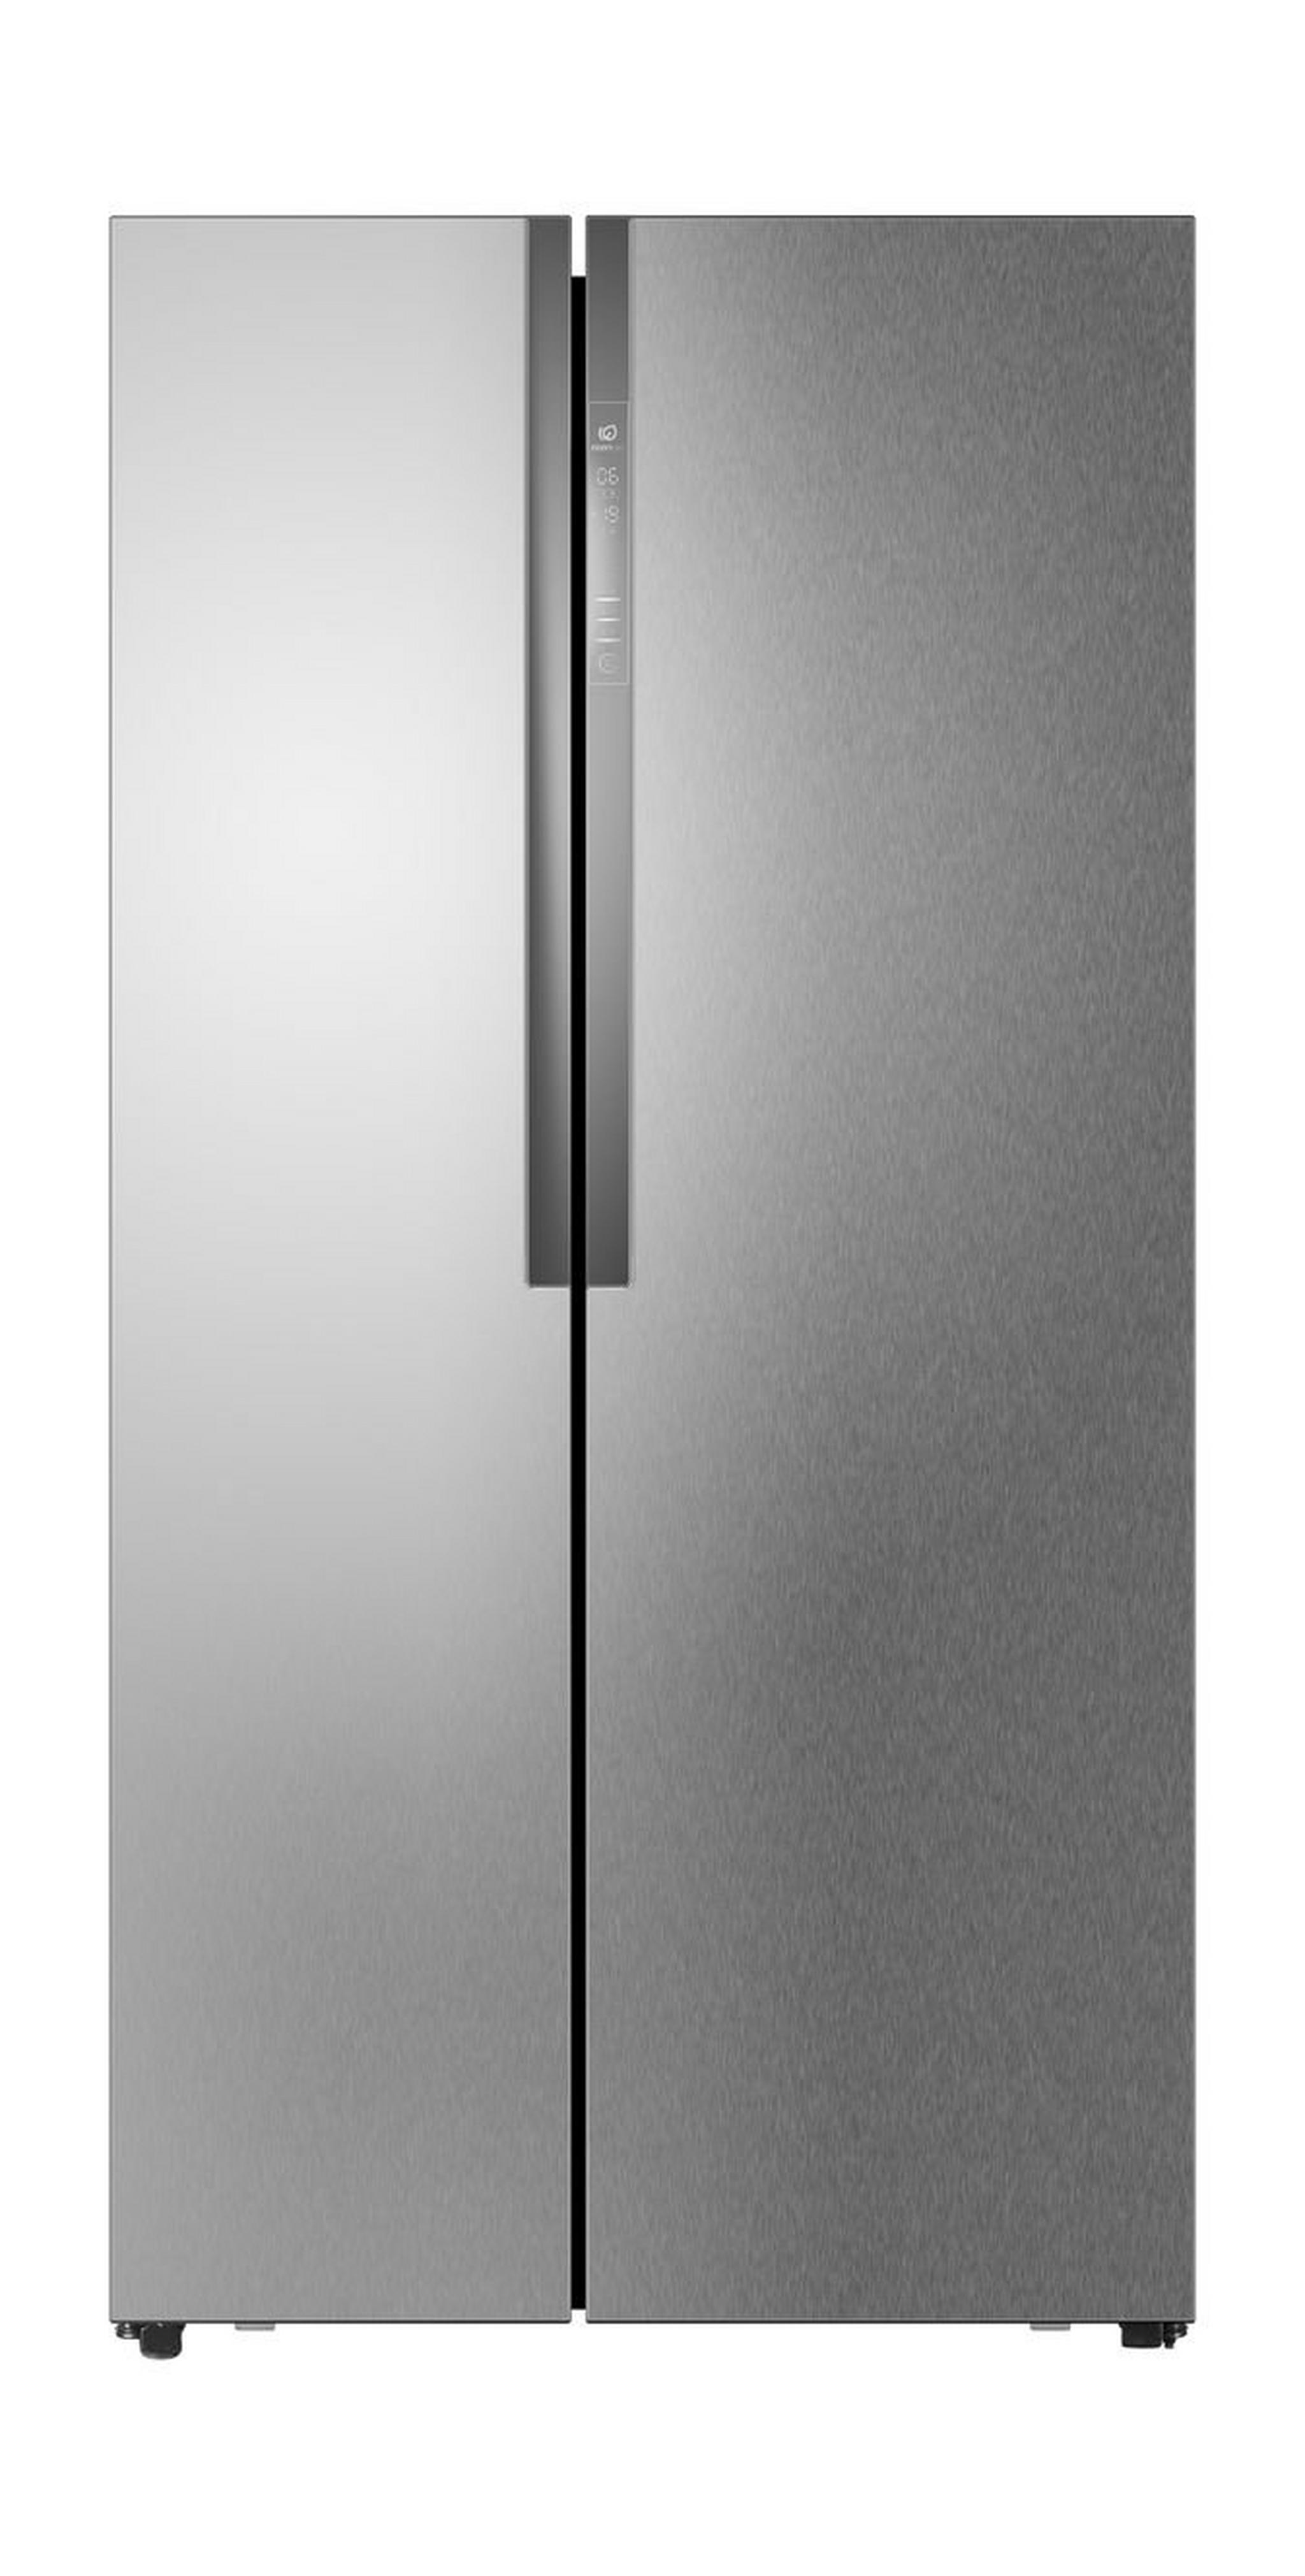 Haier 18.4 Cft. Side By Side Refrigerator (HRF-618DM6) – Silver